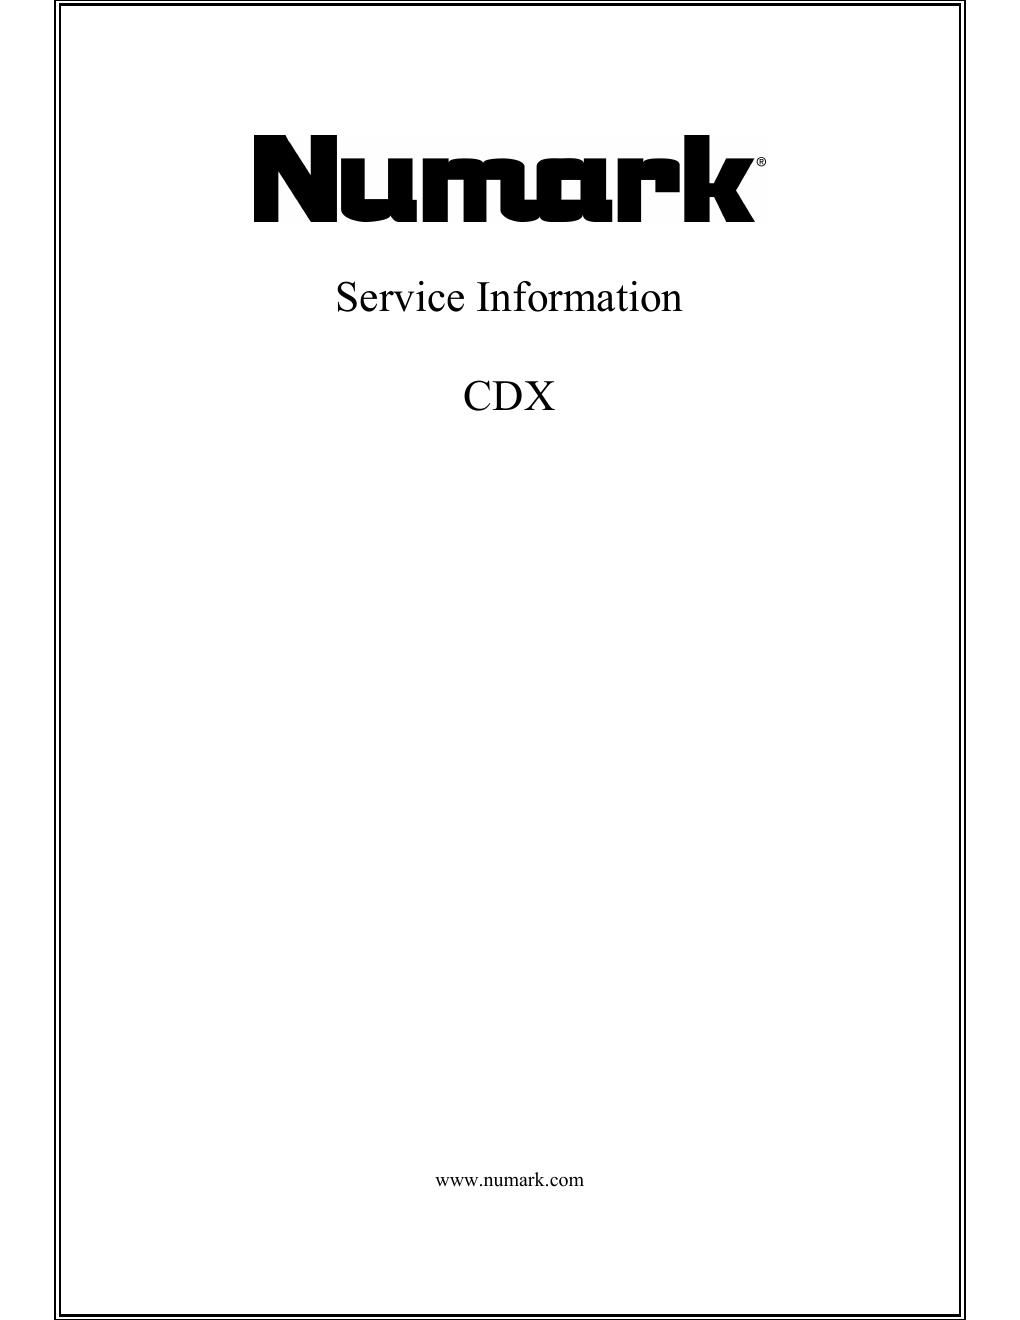 numark cdx service manual